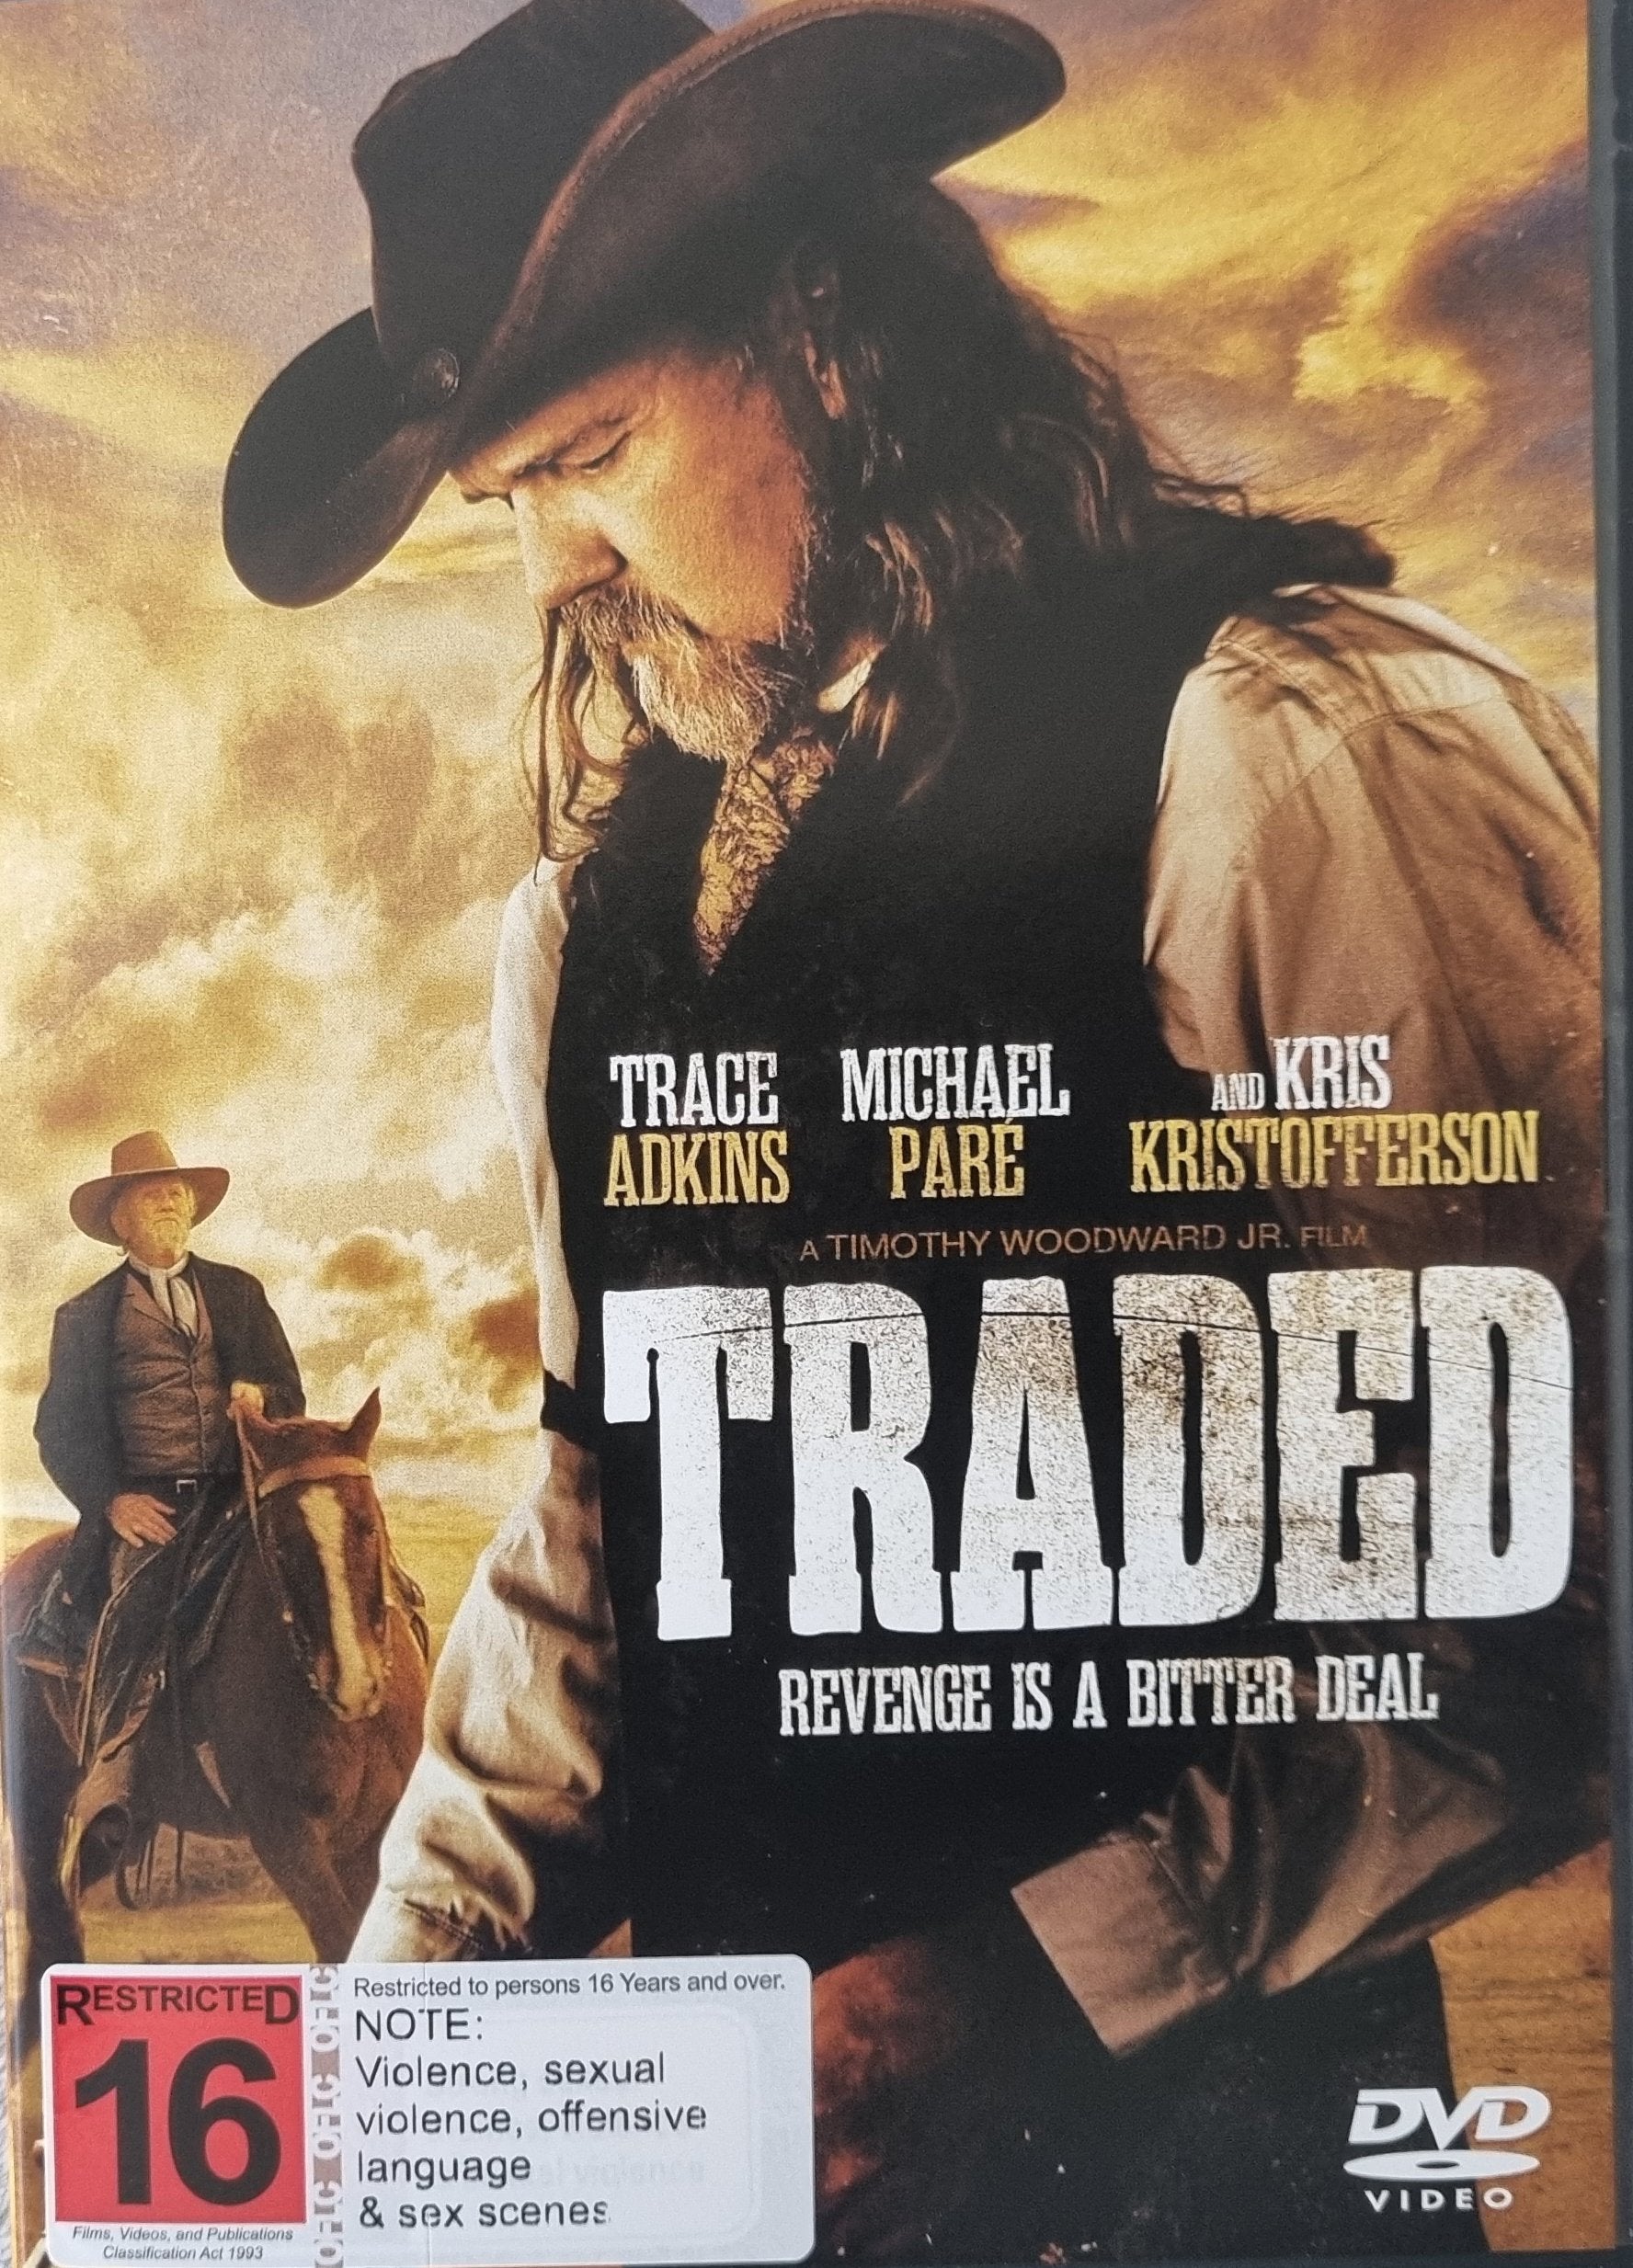 Traded (DVD)